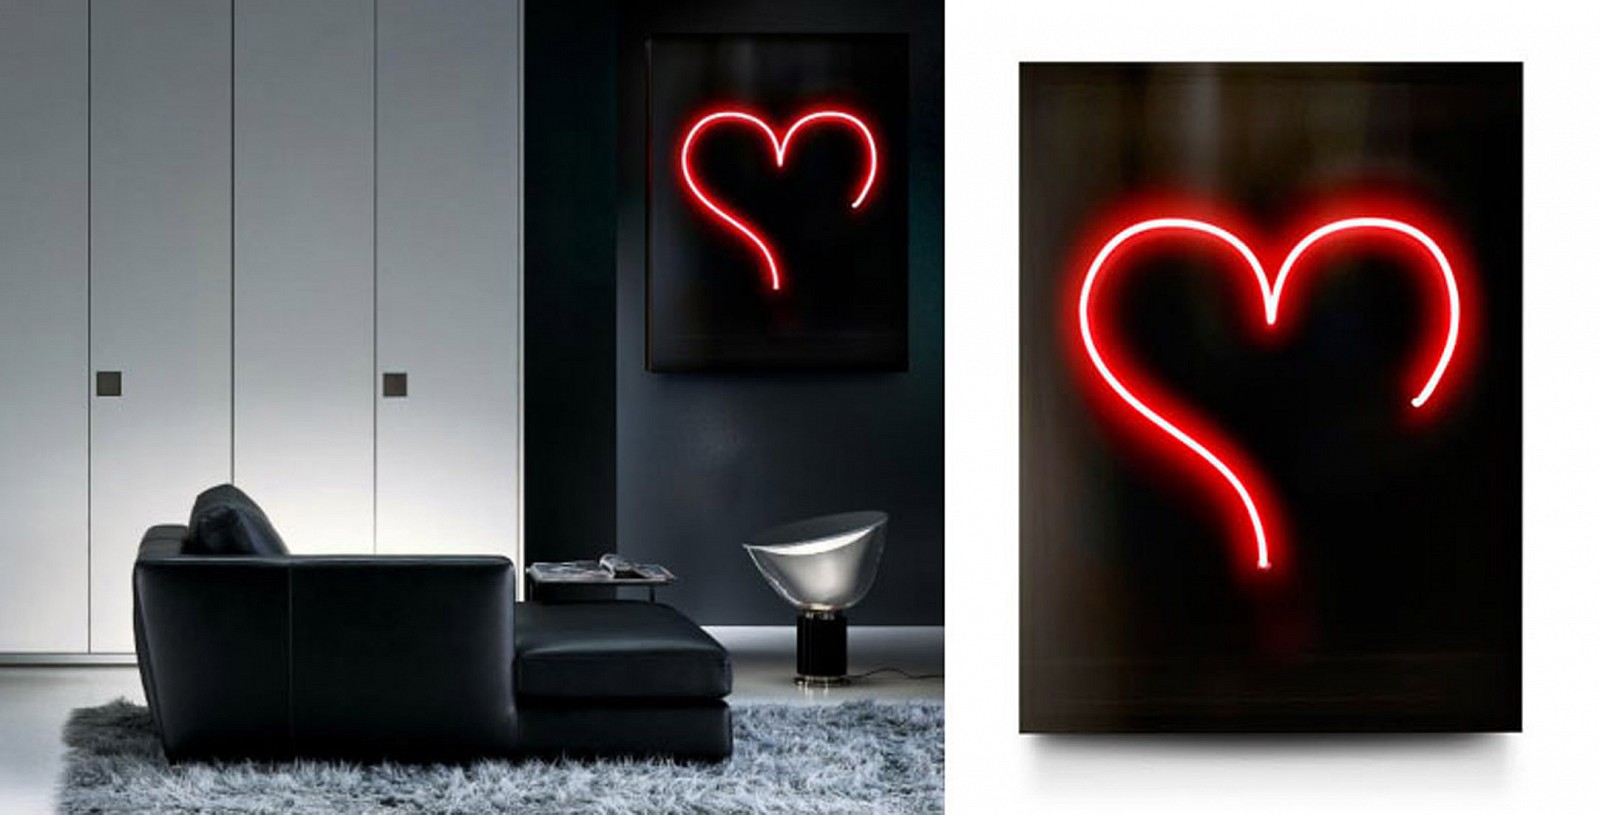 David Drebin, Big Heart, 2013
Neon Light Installation, 40 x 30 x 7.5 inches